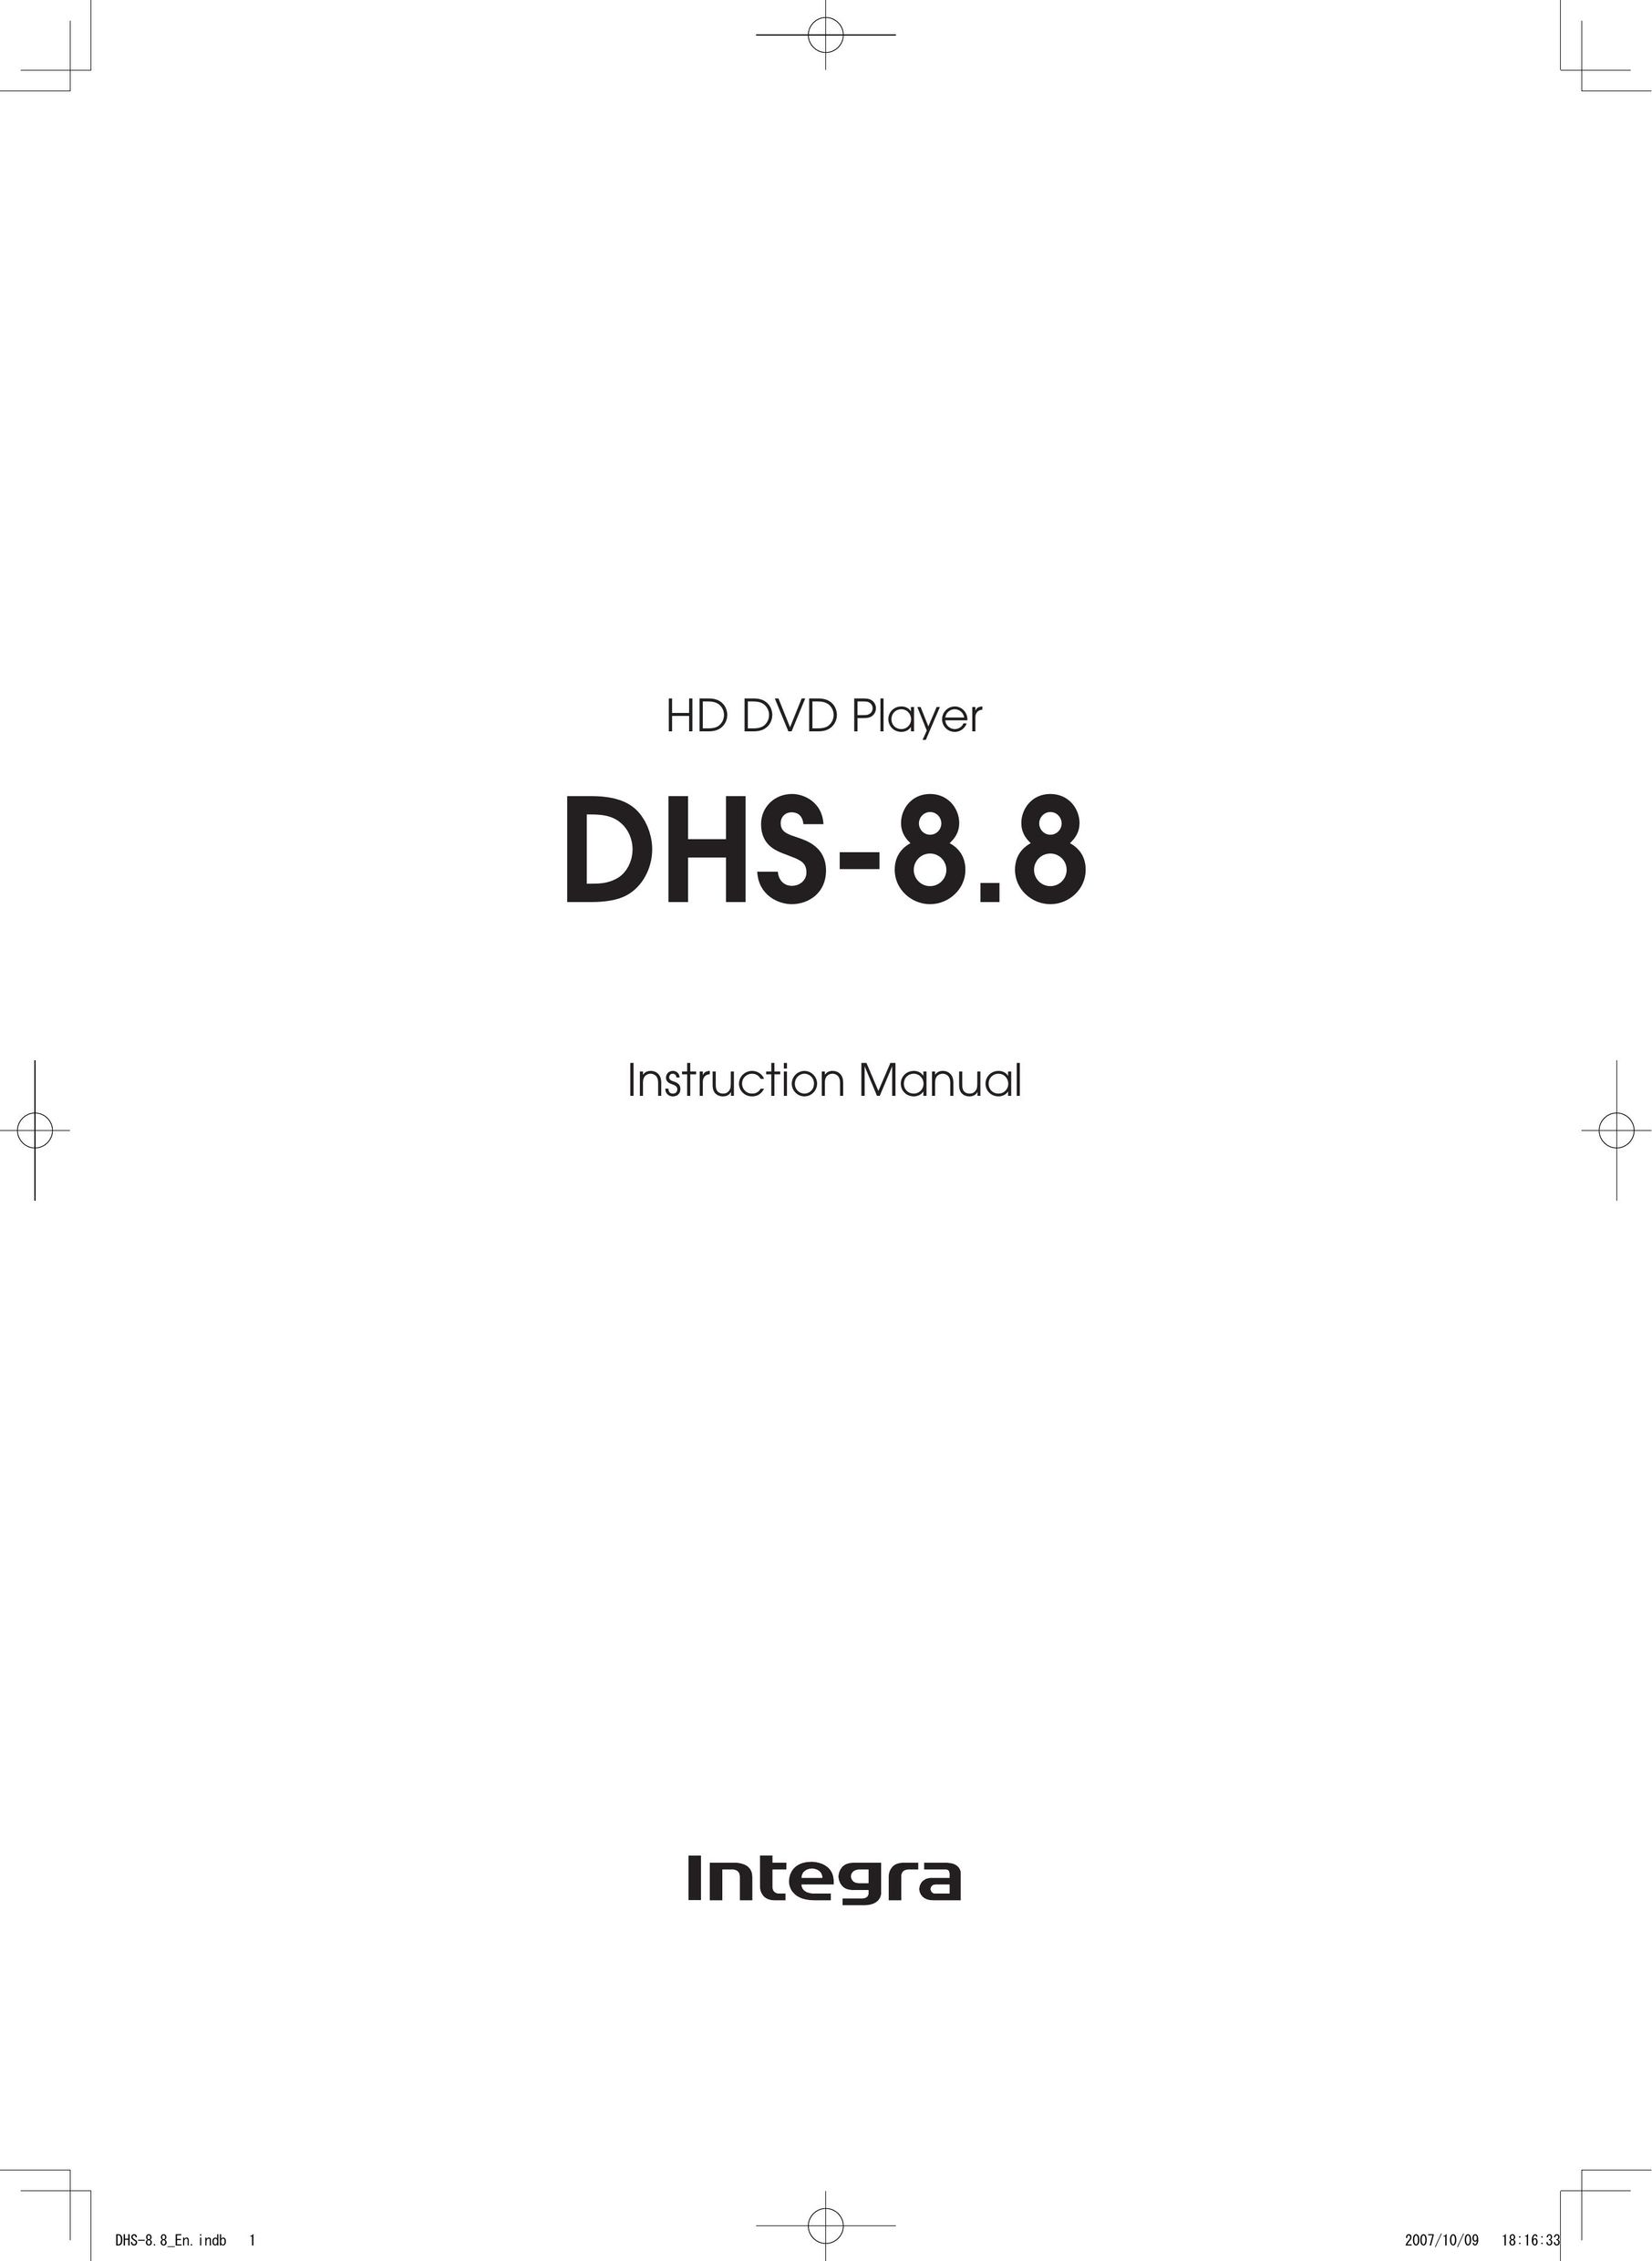 Integra DHS-8.8 DVD Player User Manual